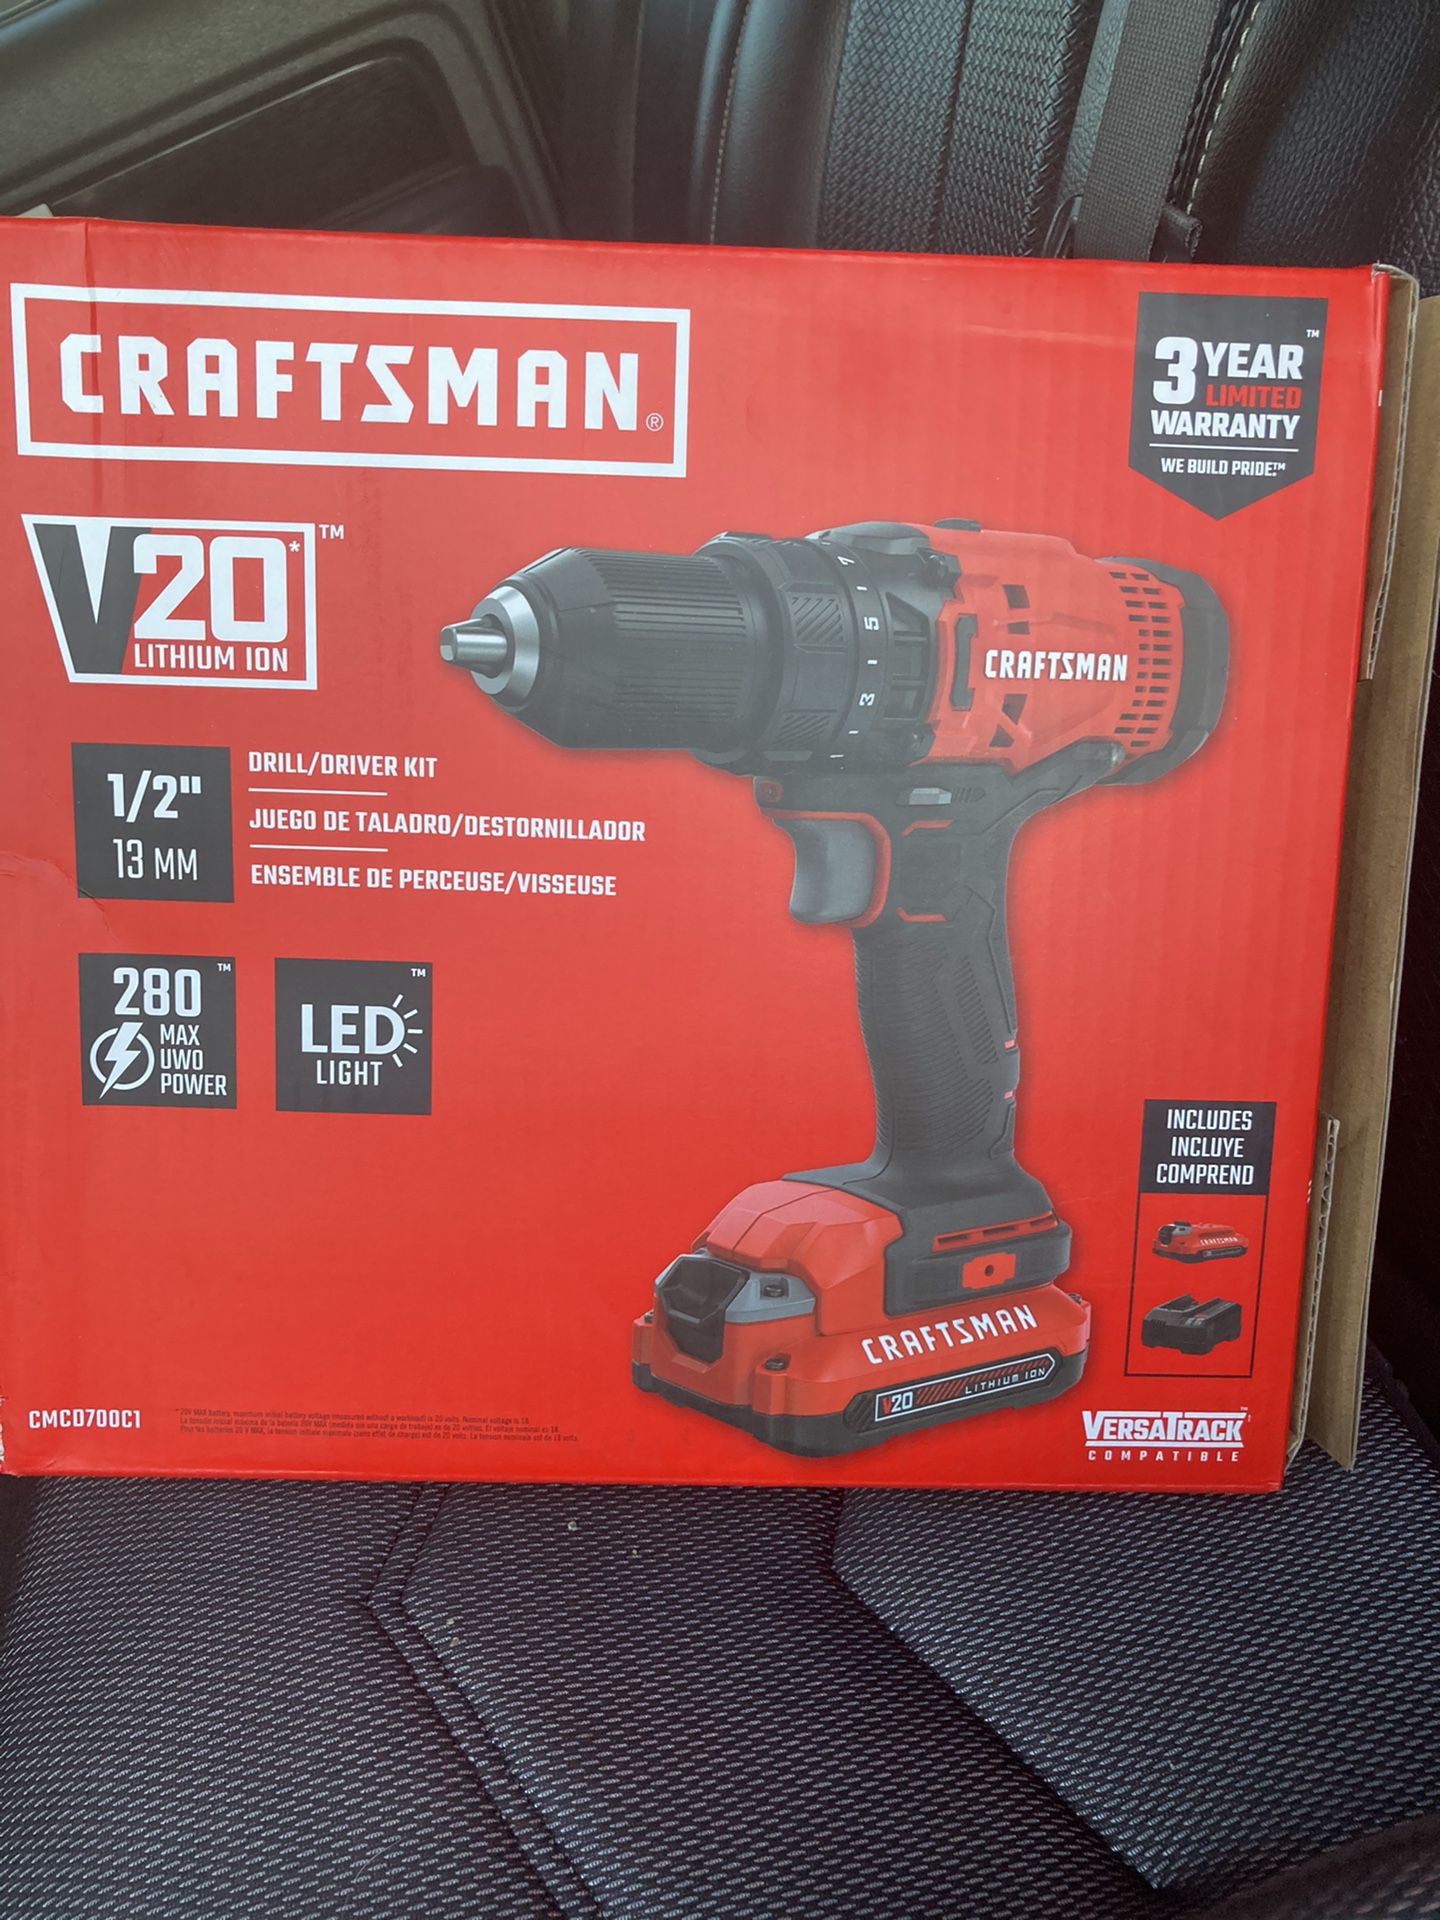 Brand new craftsman drill